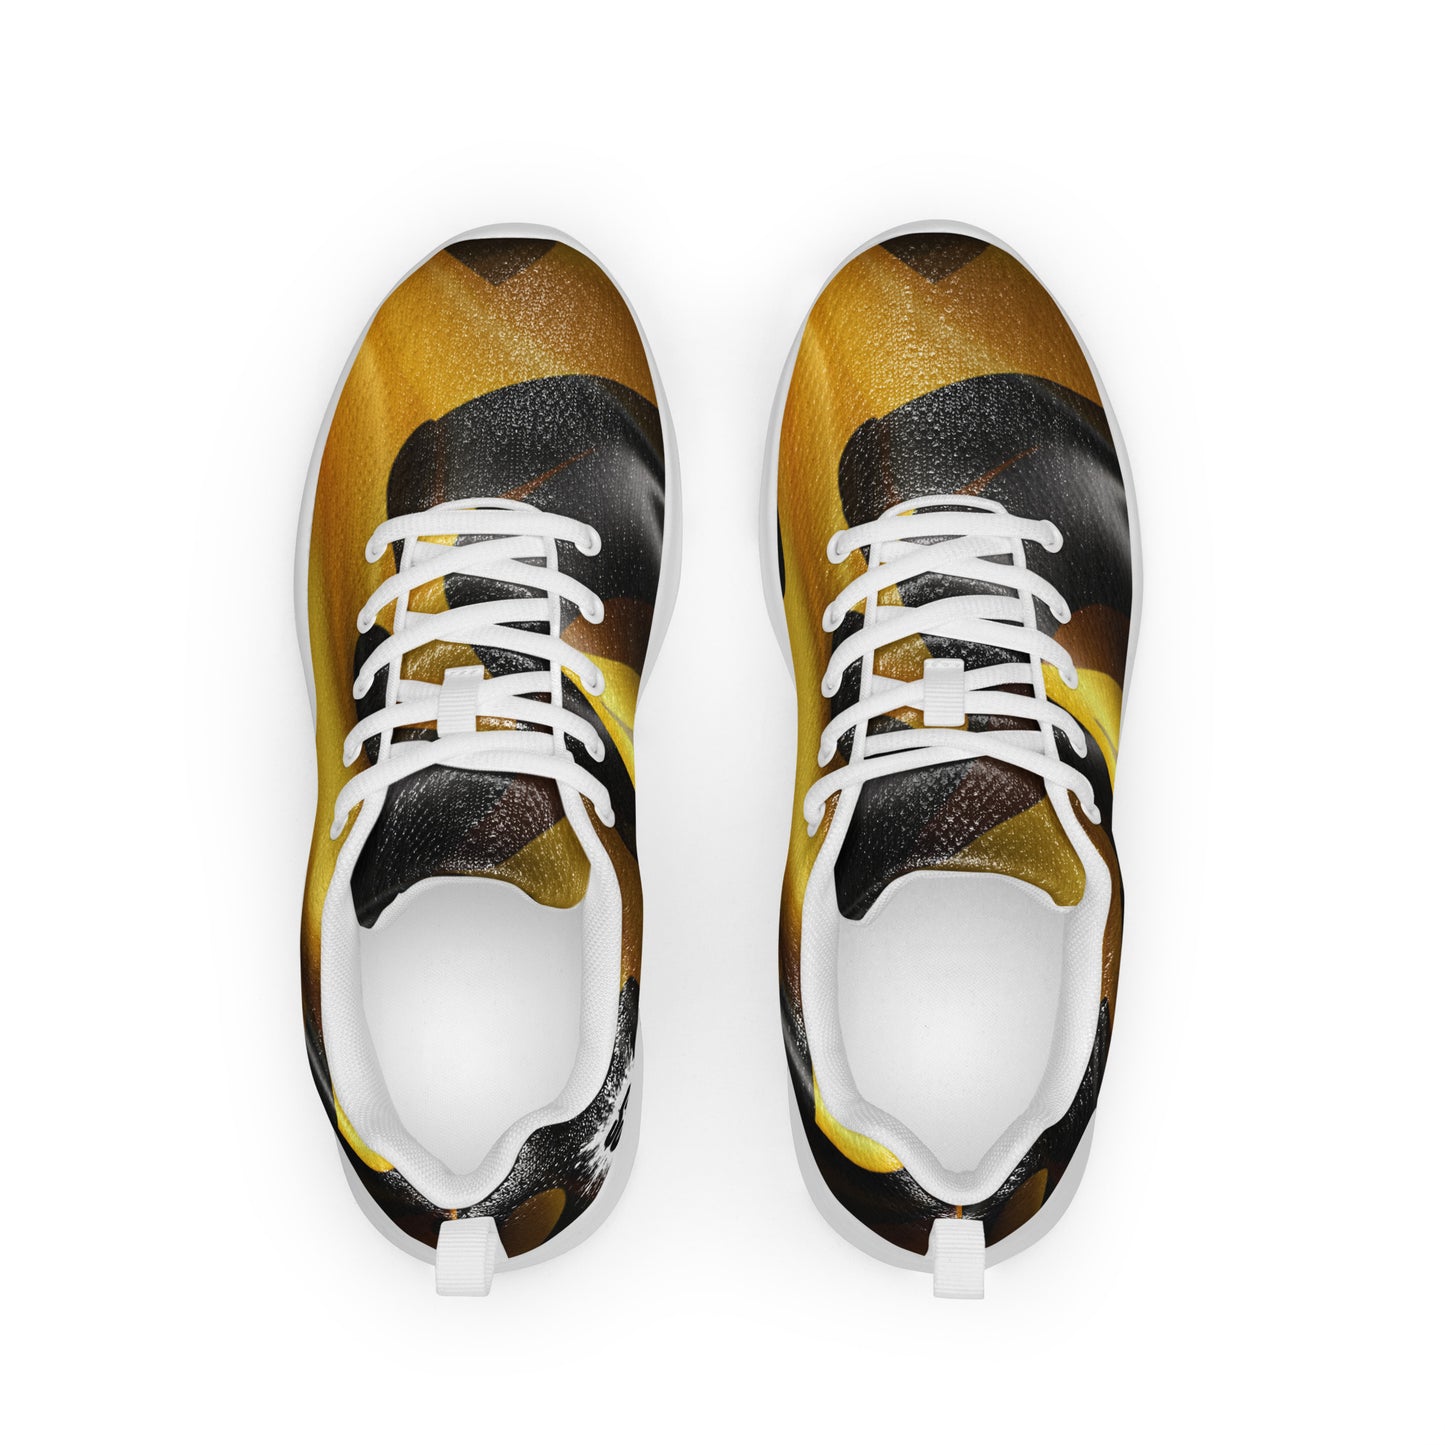 Black & Gold Satin Men’s athletic shoes